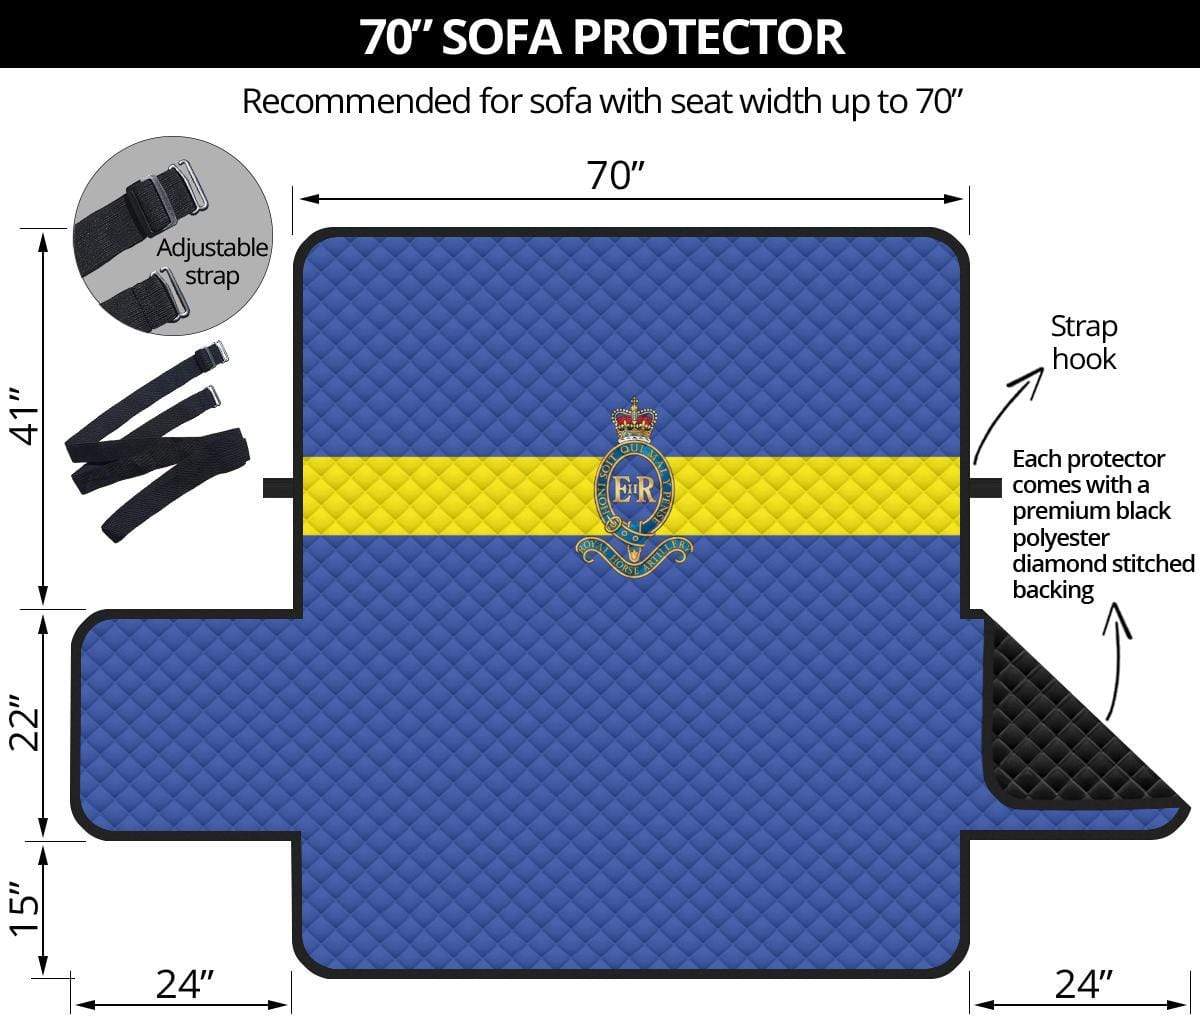 sofa protector 70" 1 Reg't Royal Horse Artillery 3-Seat Sofa Protector